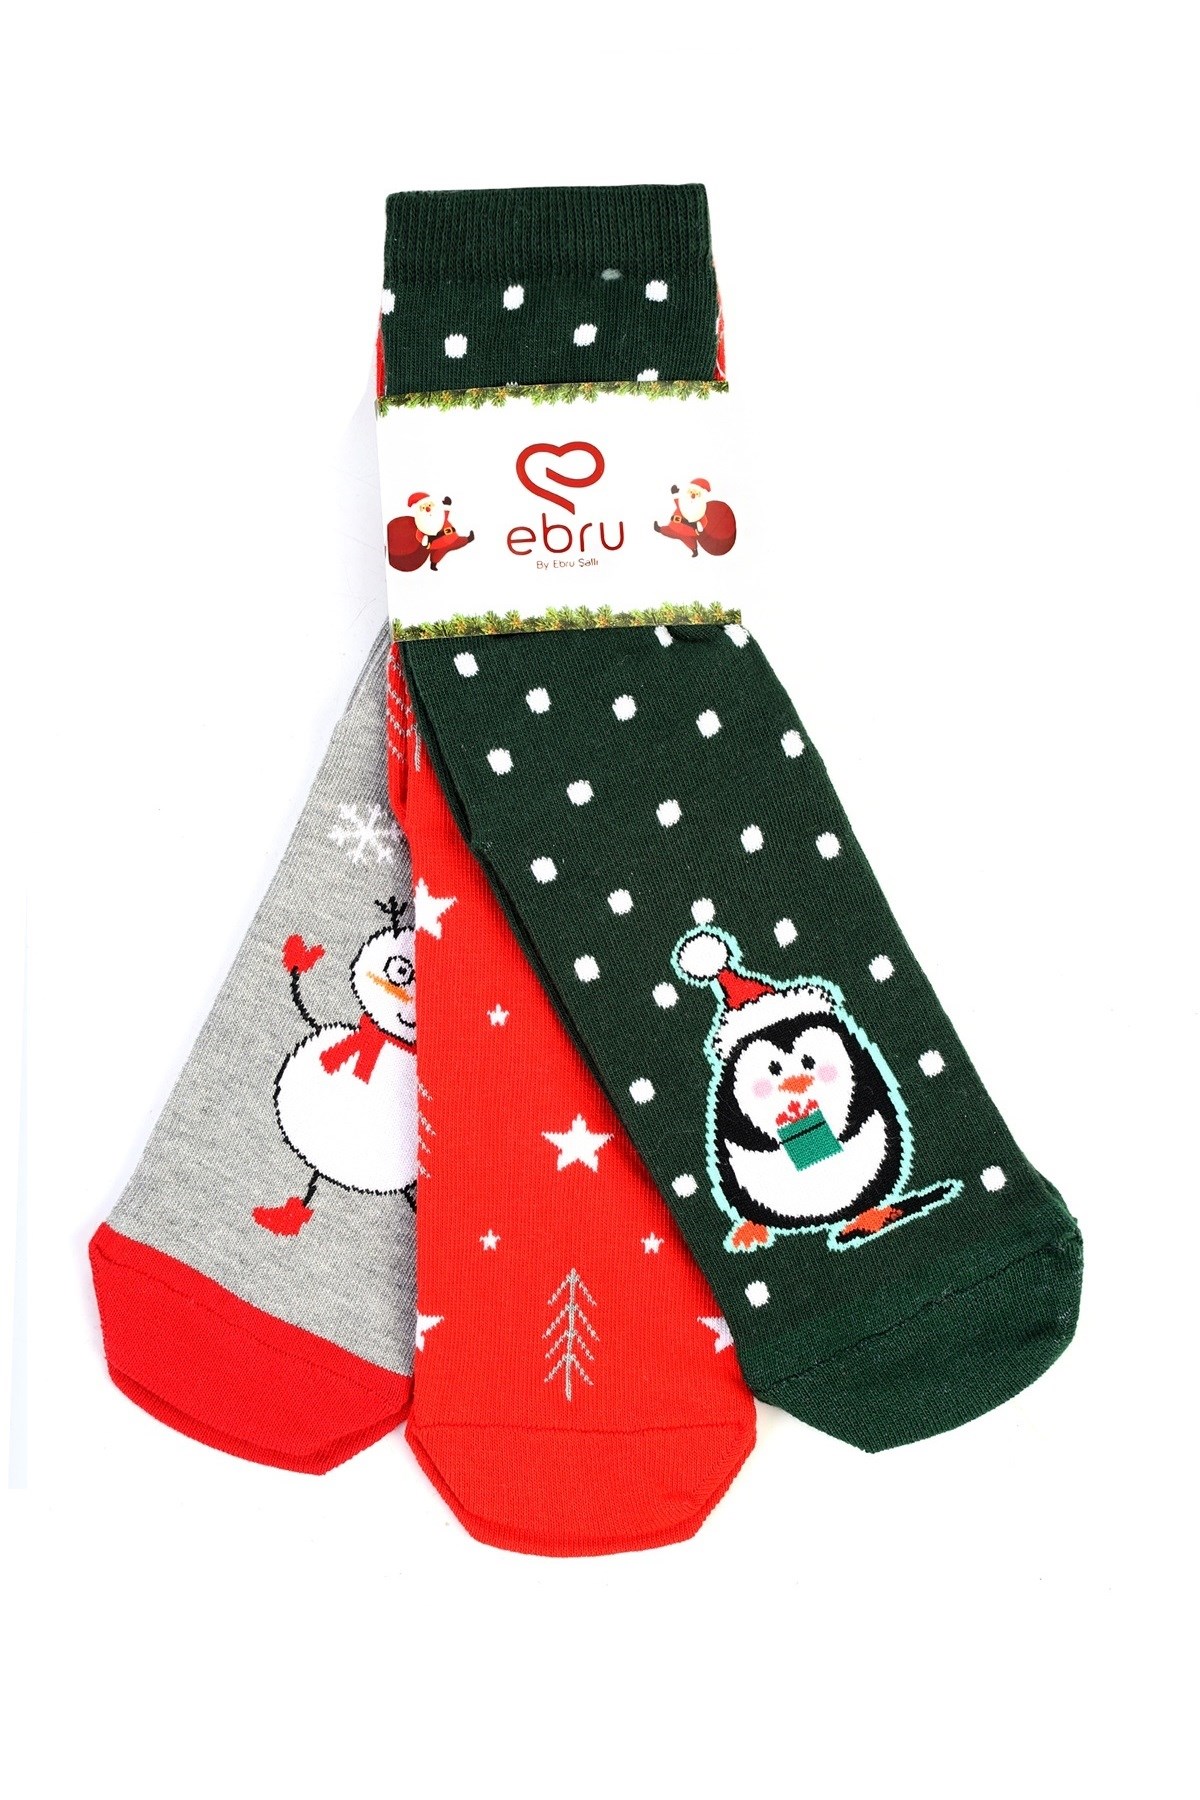 ebrusalli.com.tr | Ebru Şallı New Year Socks 3 Colors Pack of 3